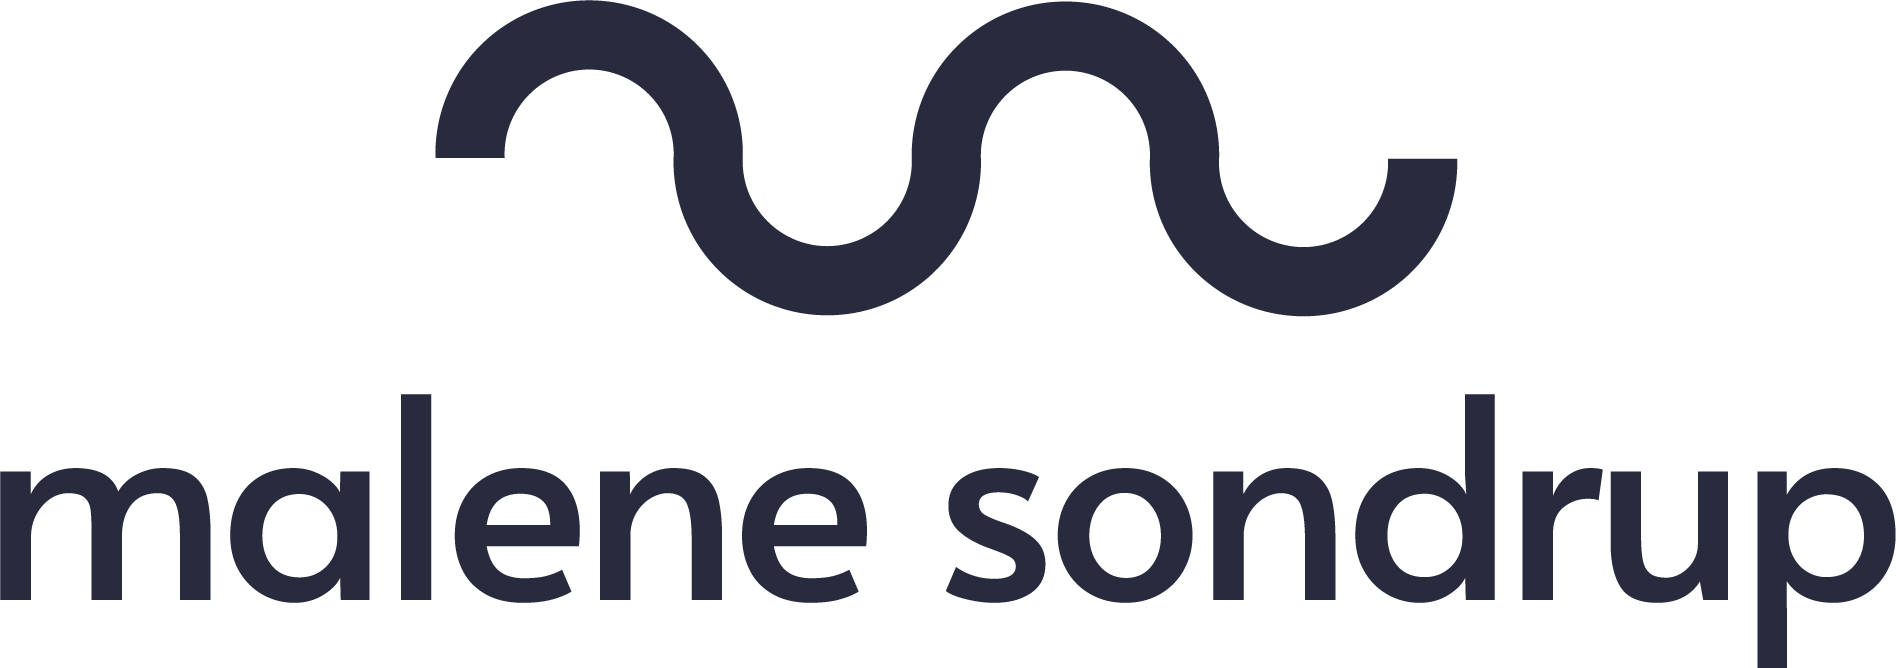 Logodesign - Blåt logo uden payoff